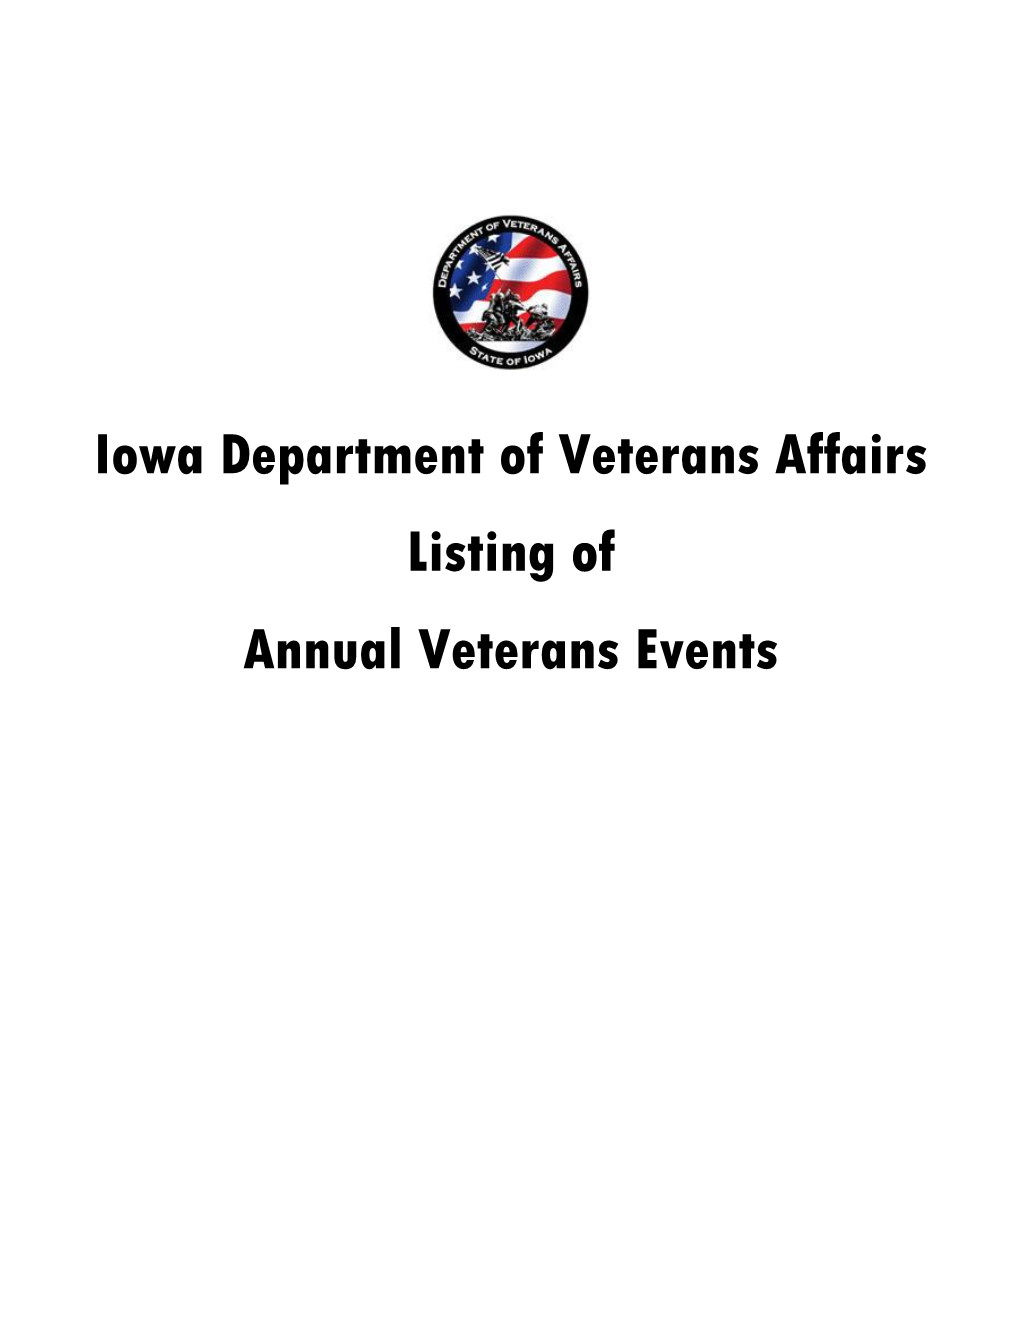 Iowa Department of Veterans Affairs Listing of Annual Veterans Events